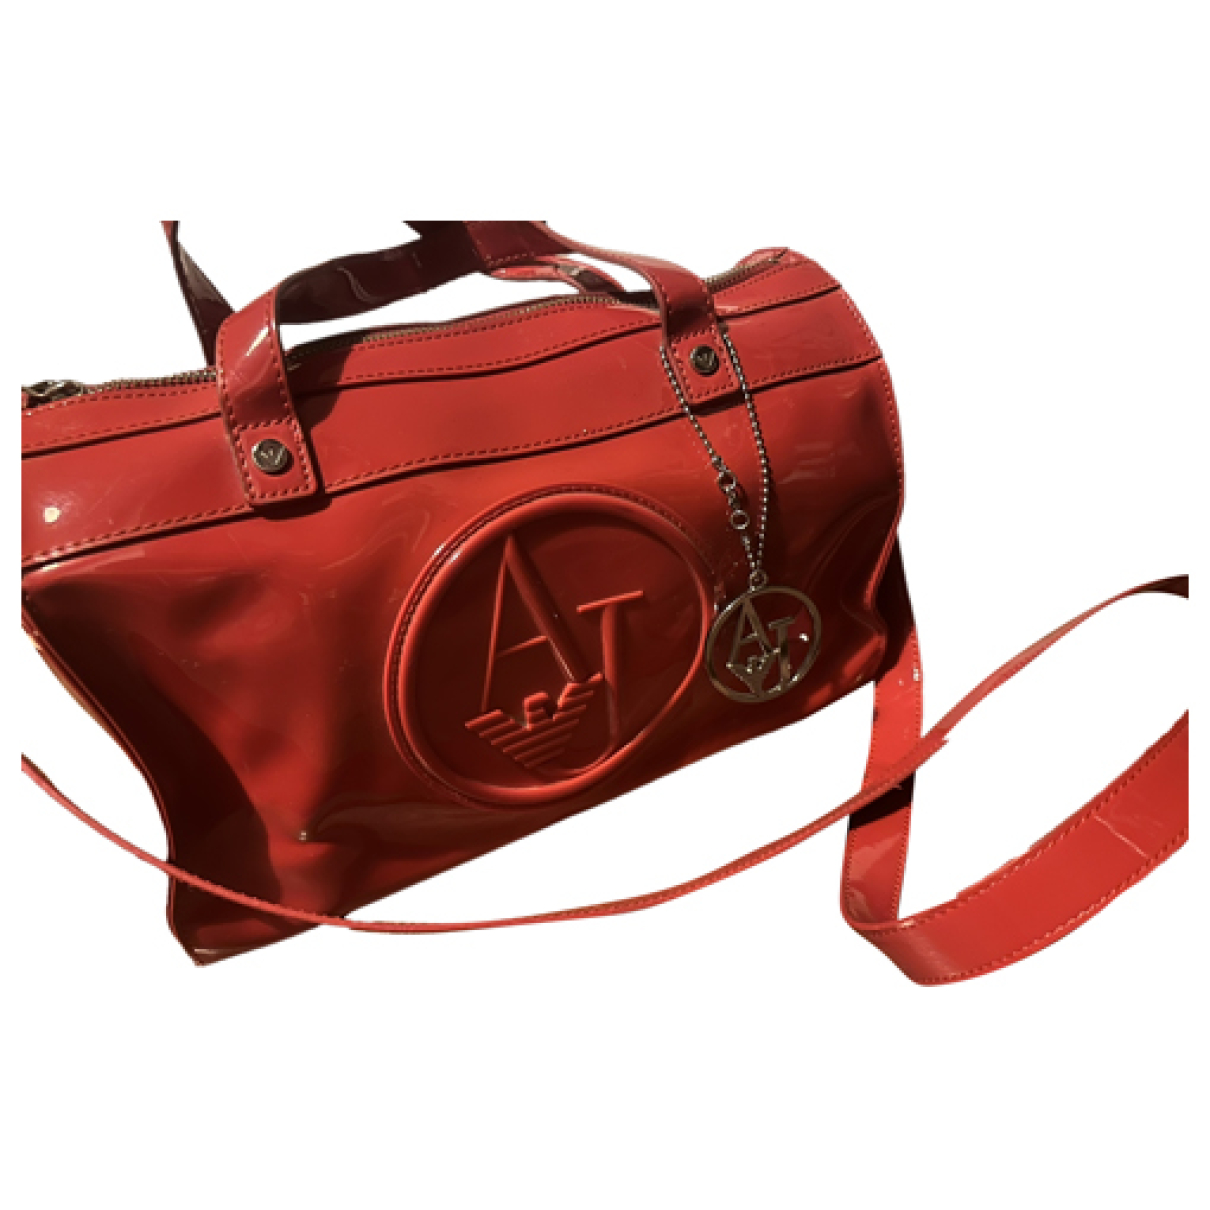 Red Patent Leather Handbag